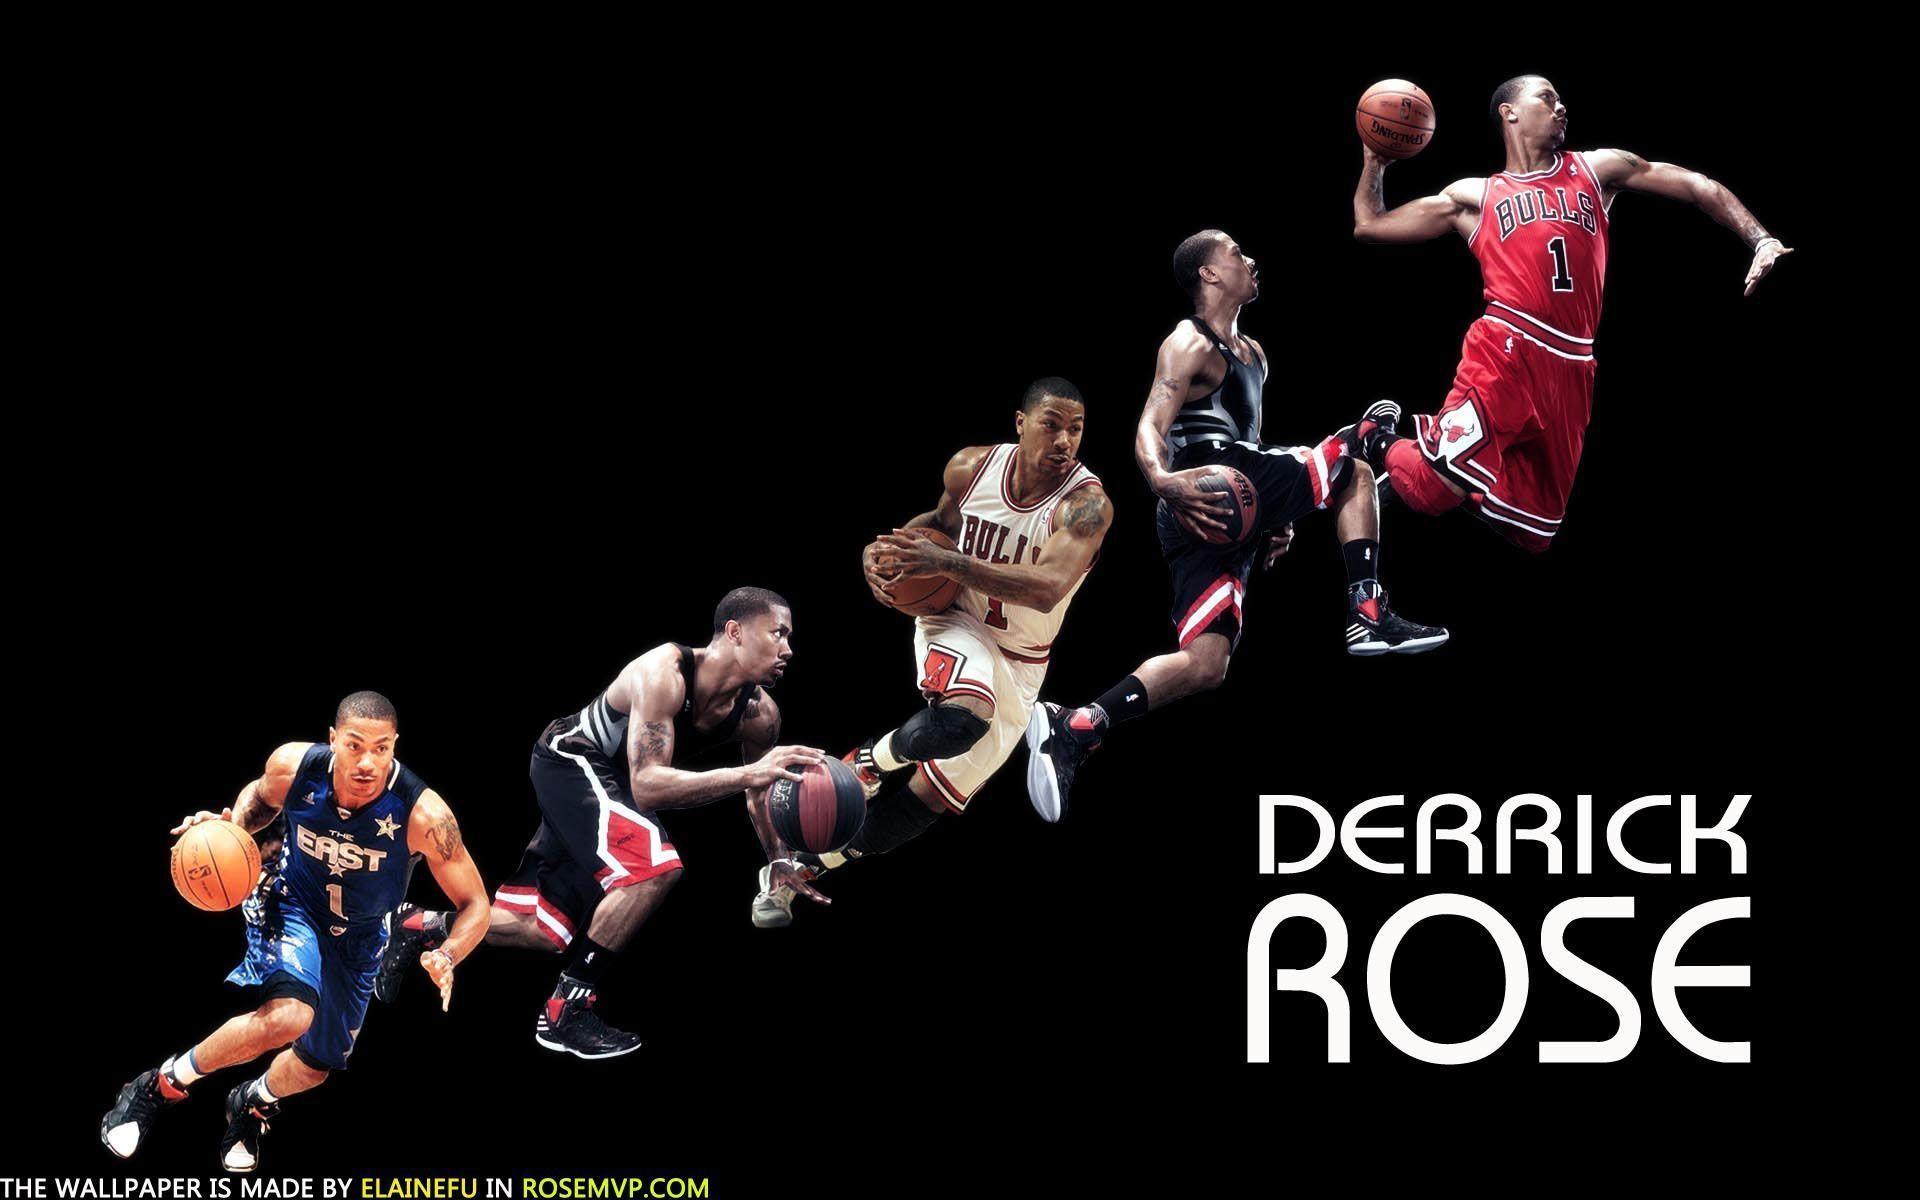 Derrick Rose Wallpaper HD. (49++ Wallpaper)